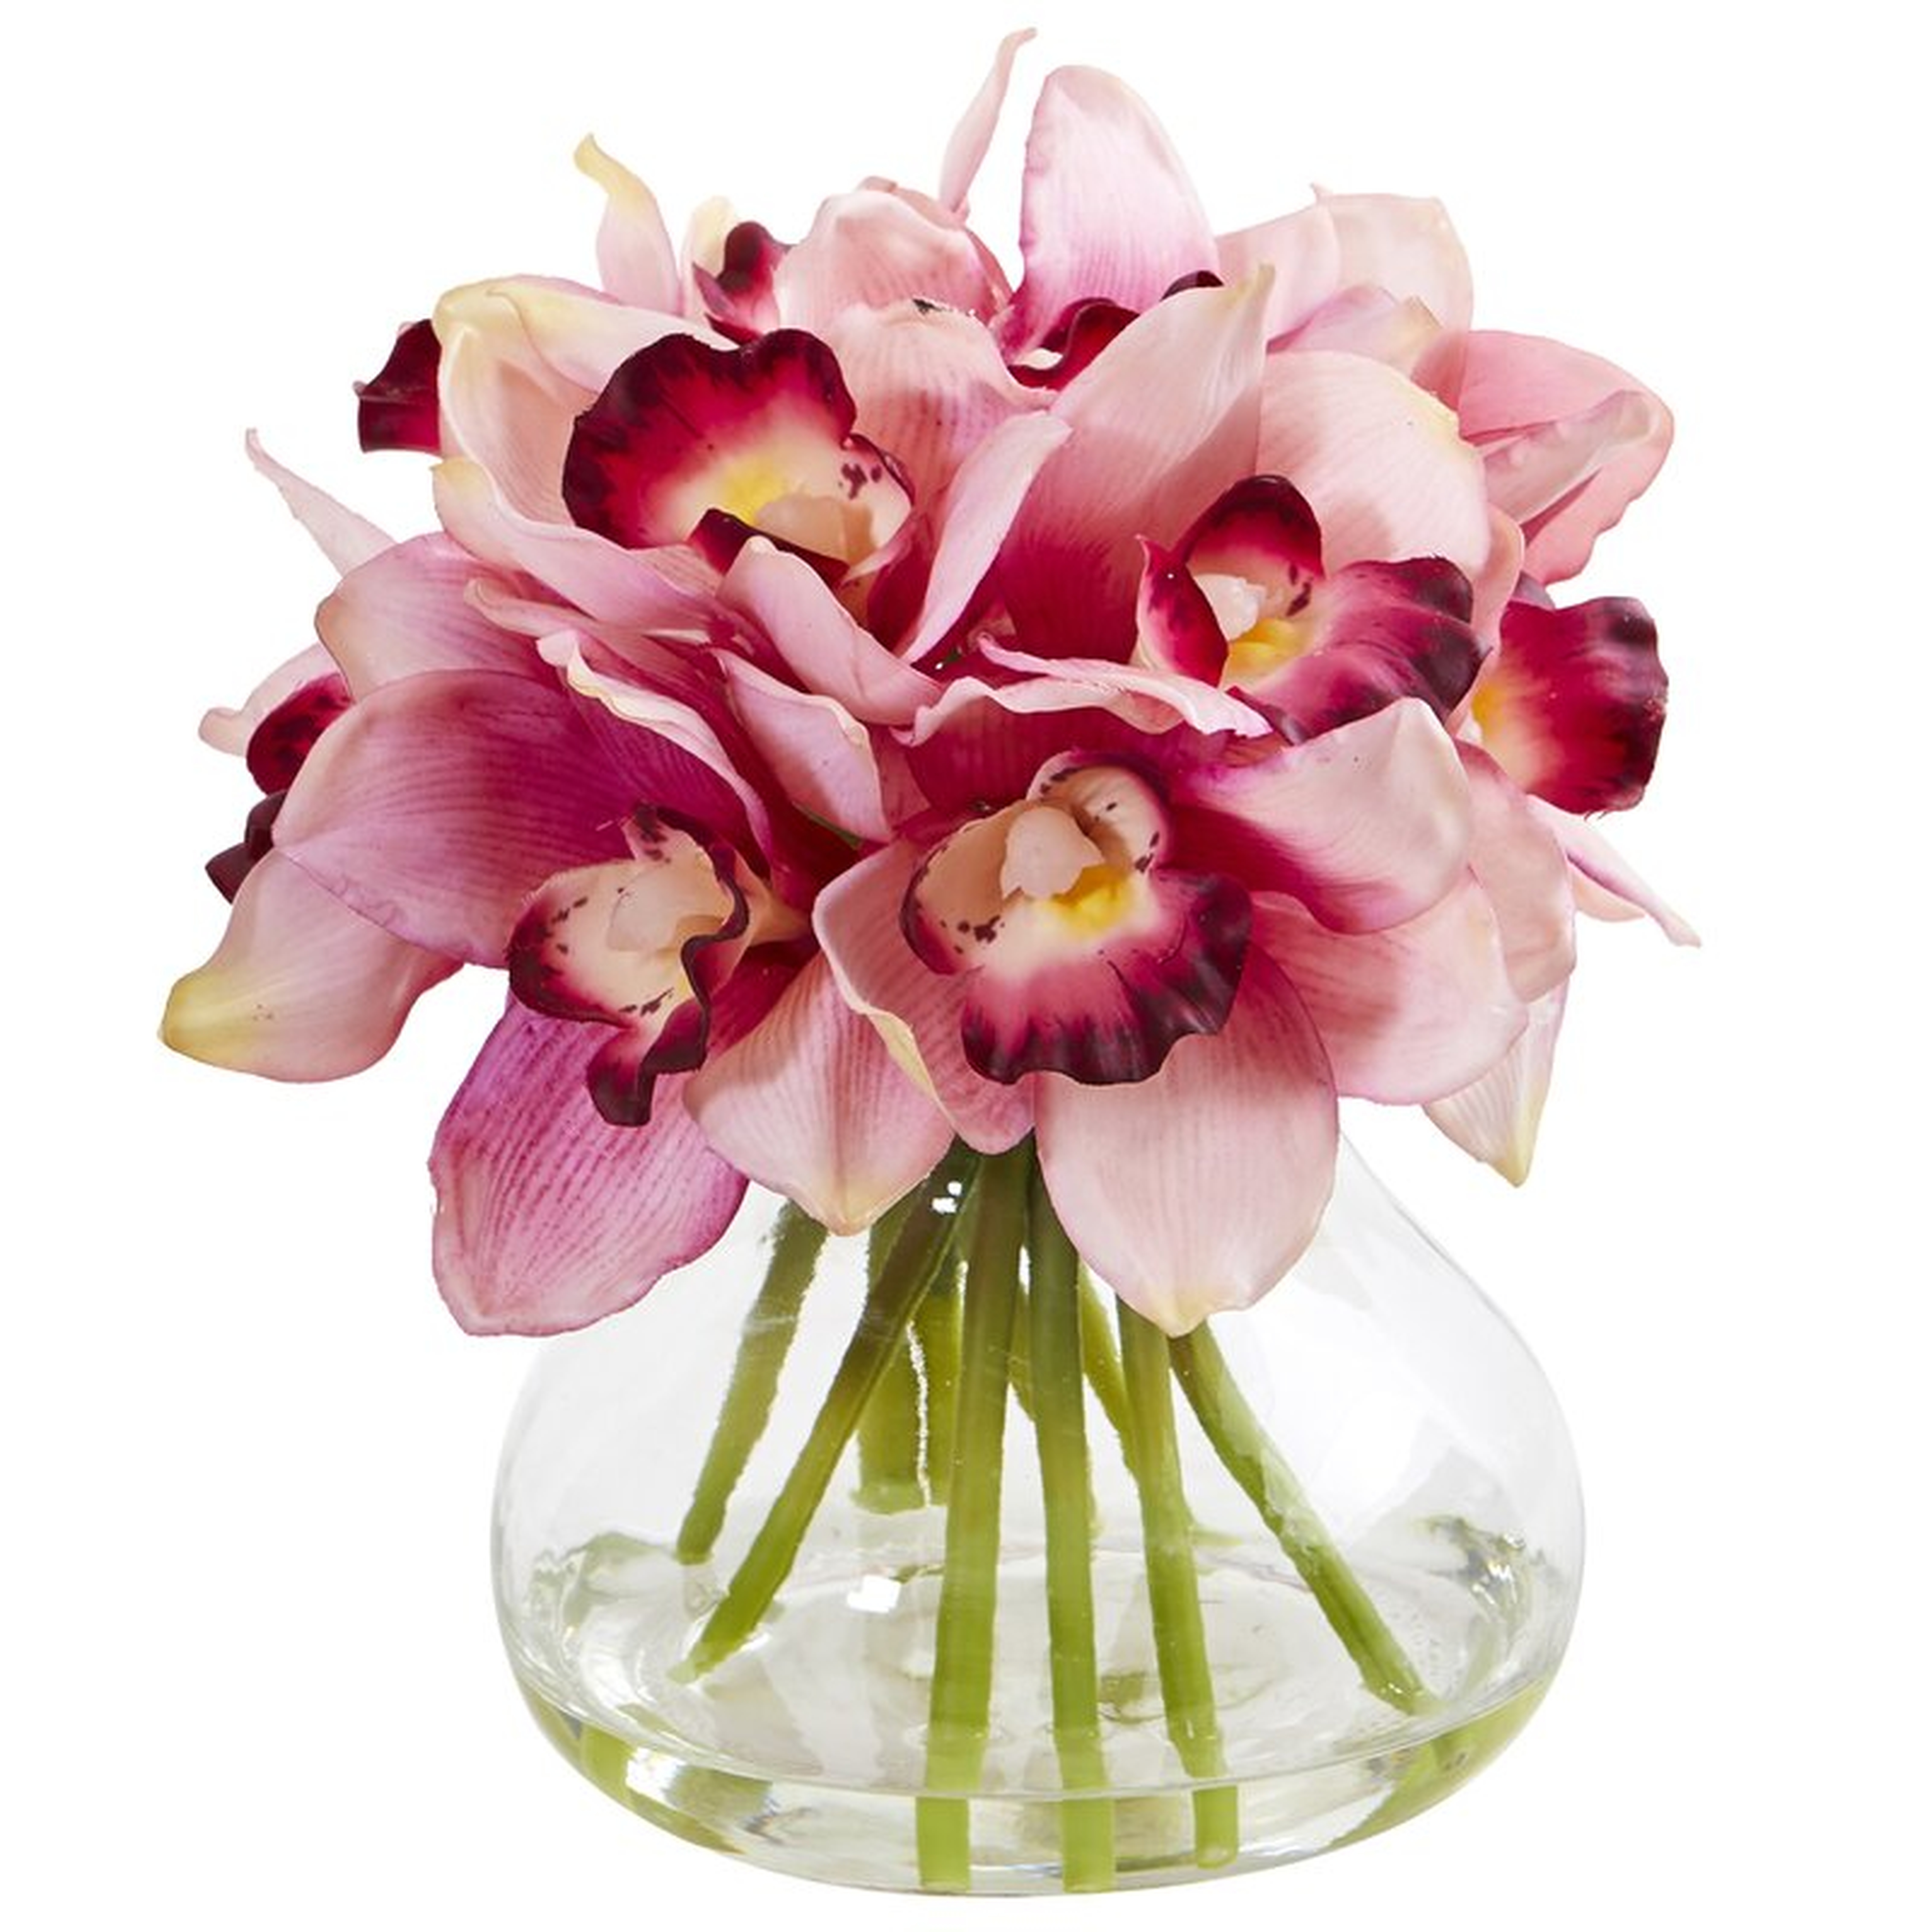 Artificial Cymbidium Orchids Floral Arrangement in Vase - Wayfair